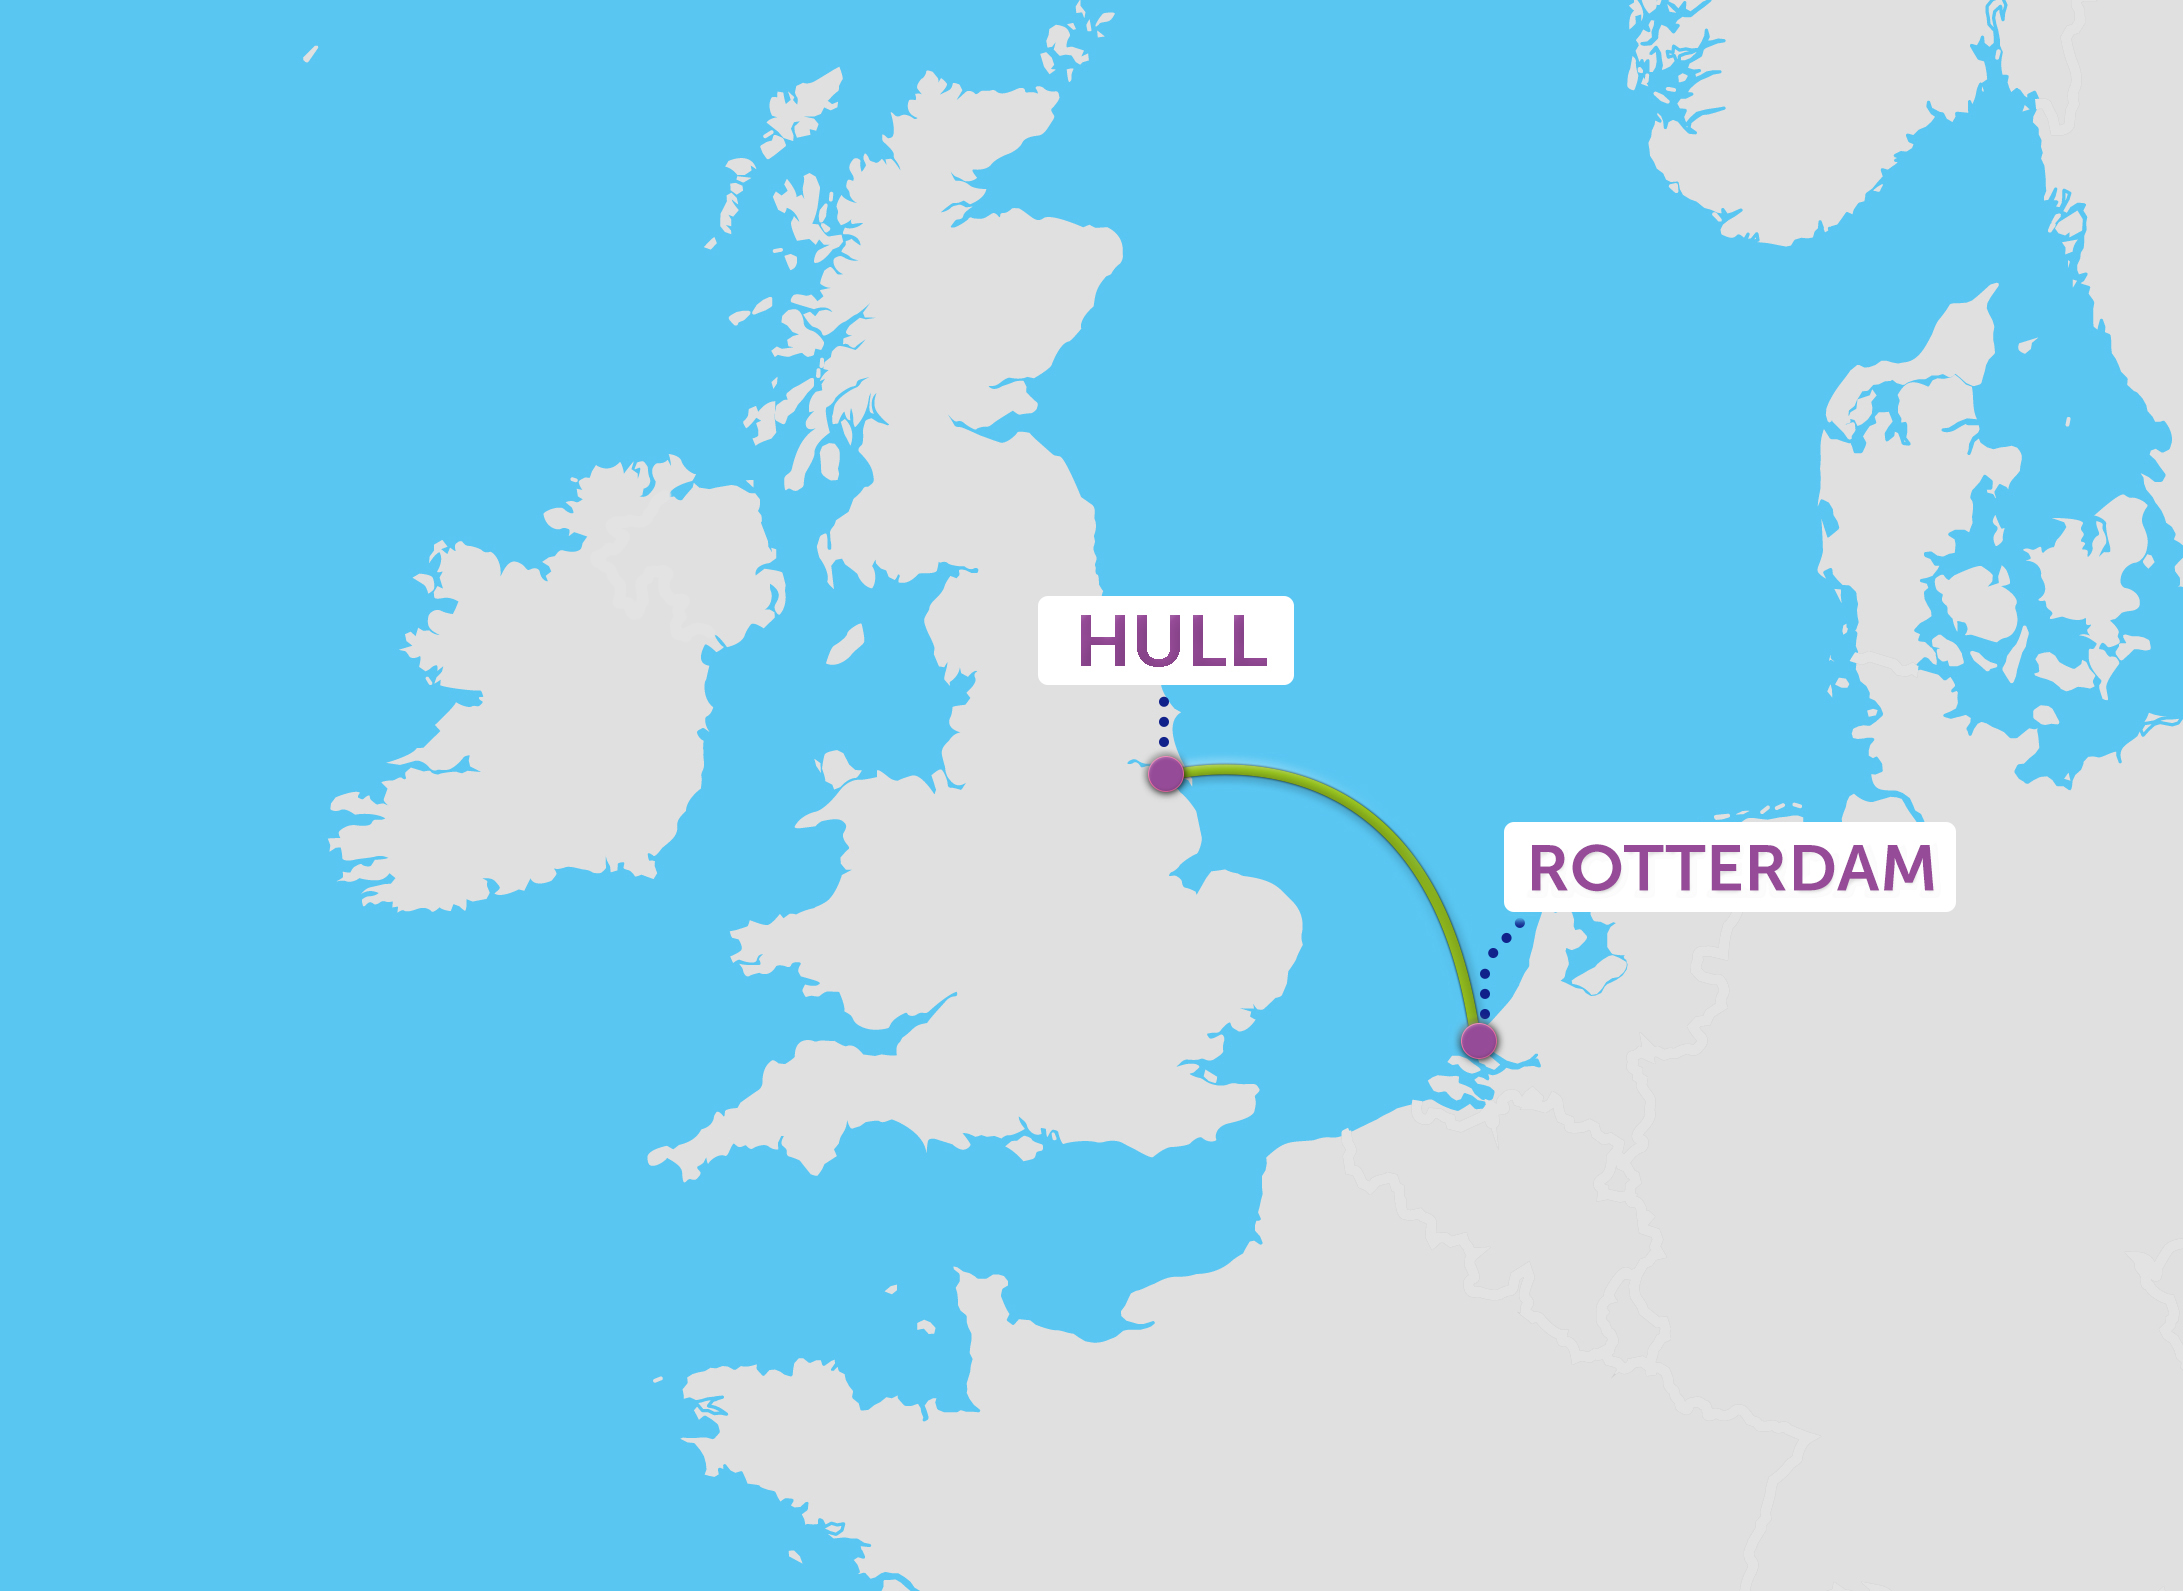 Carte de la route des ferries de P&O Hull to Rotterdam